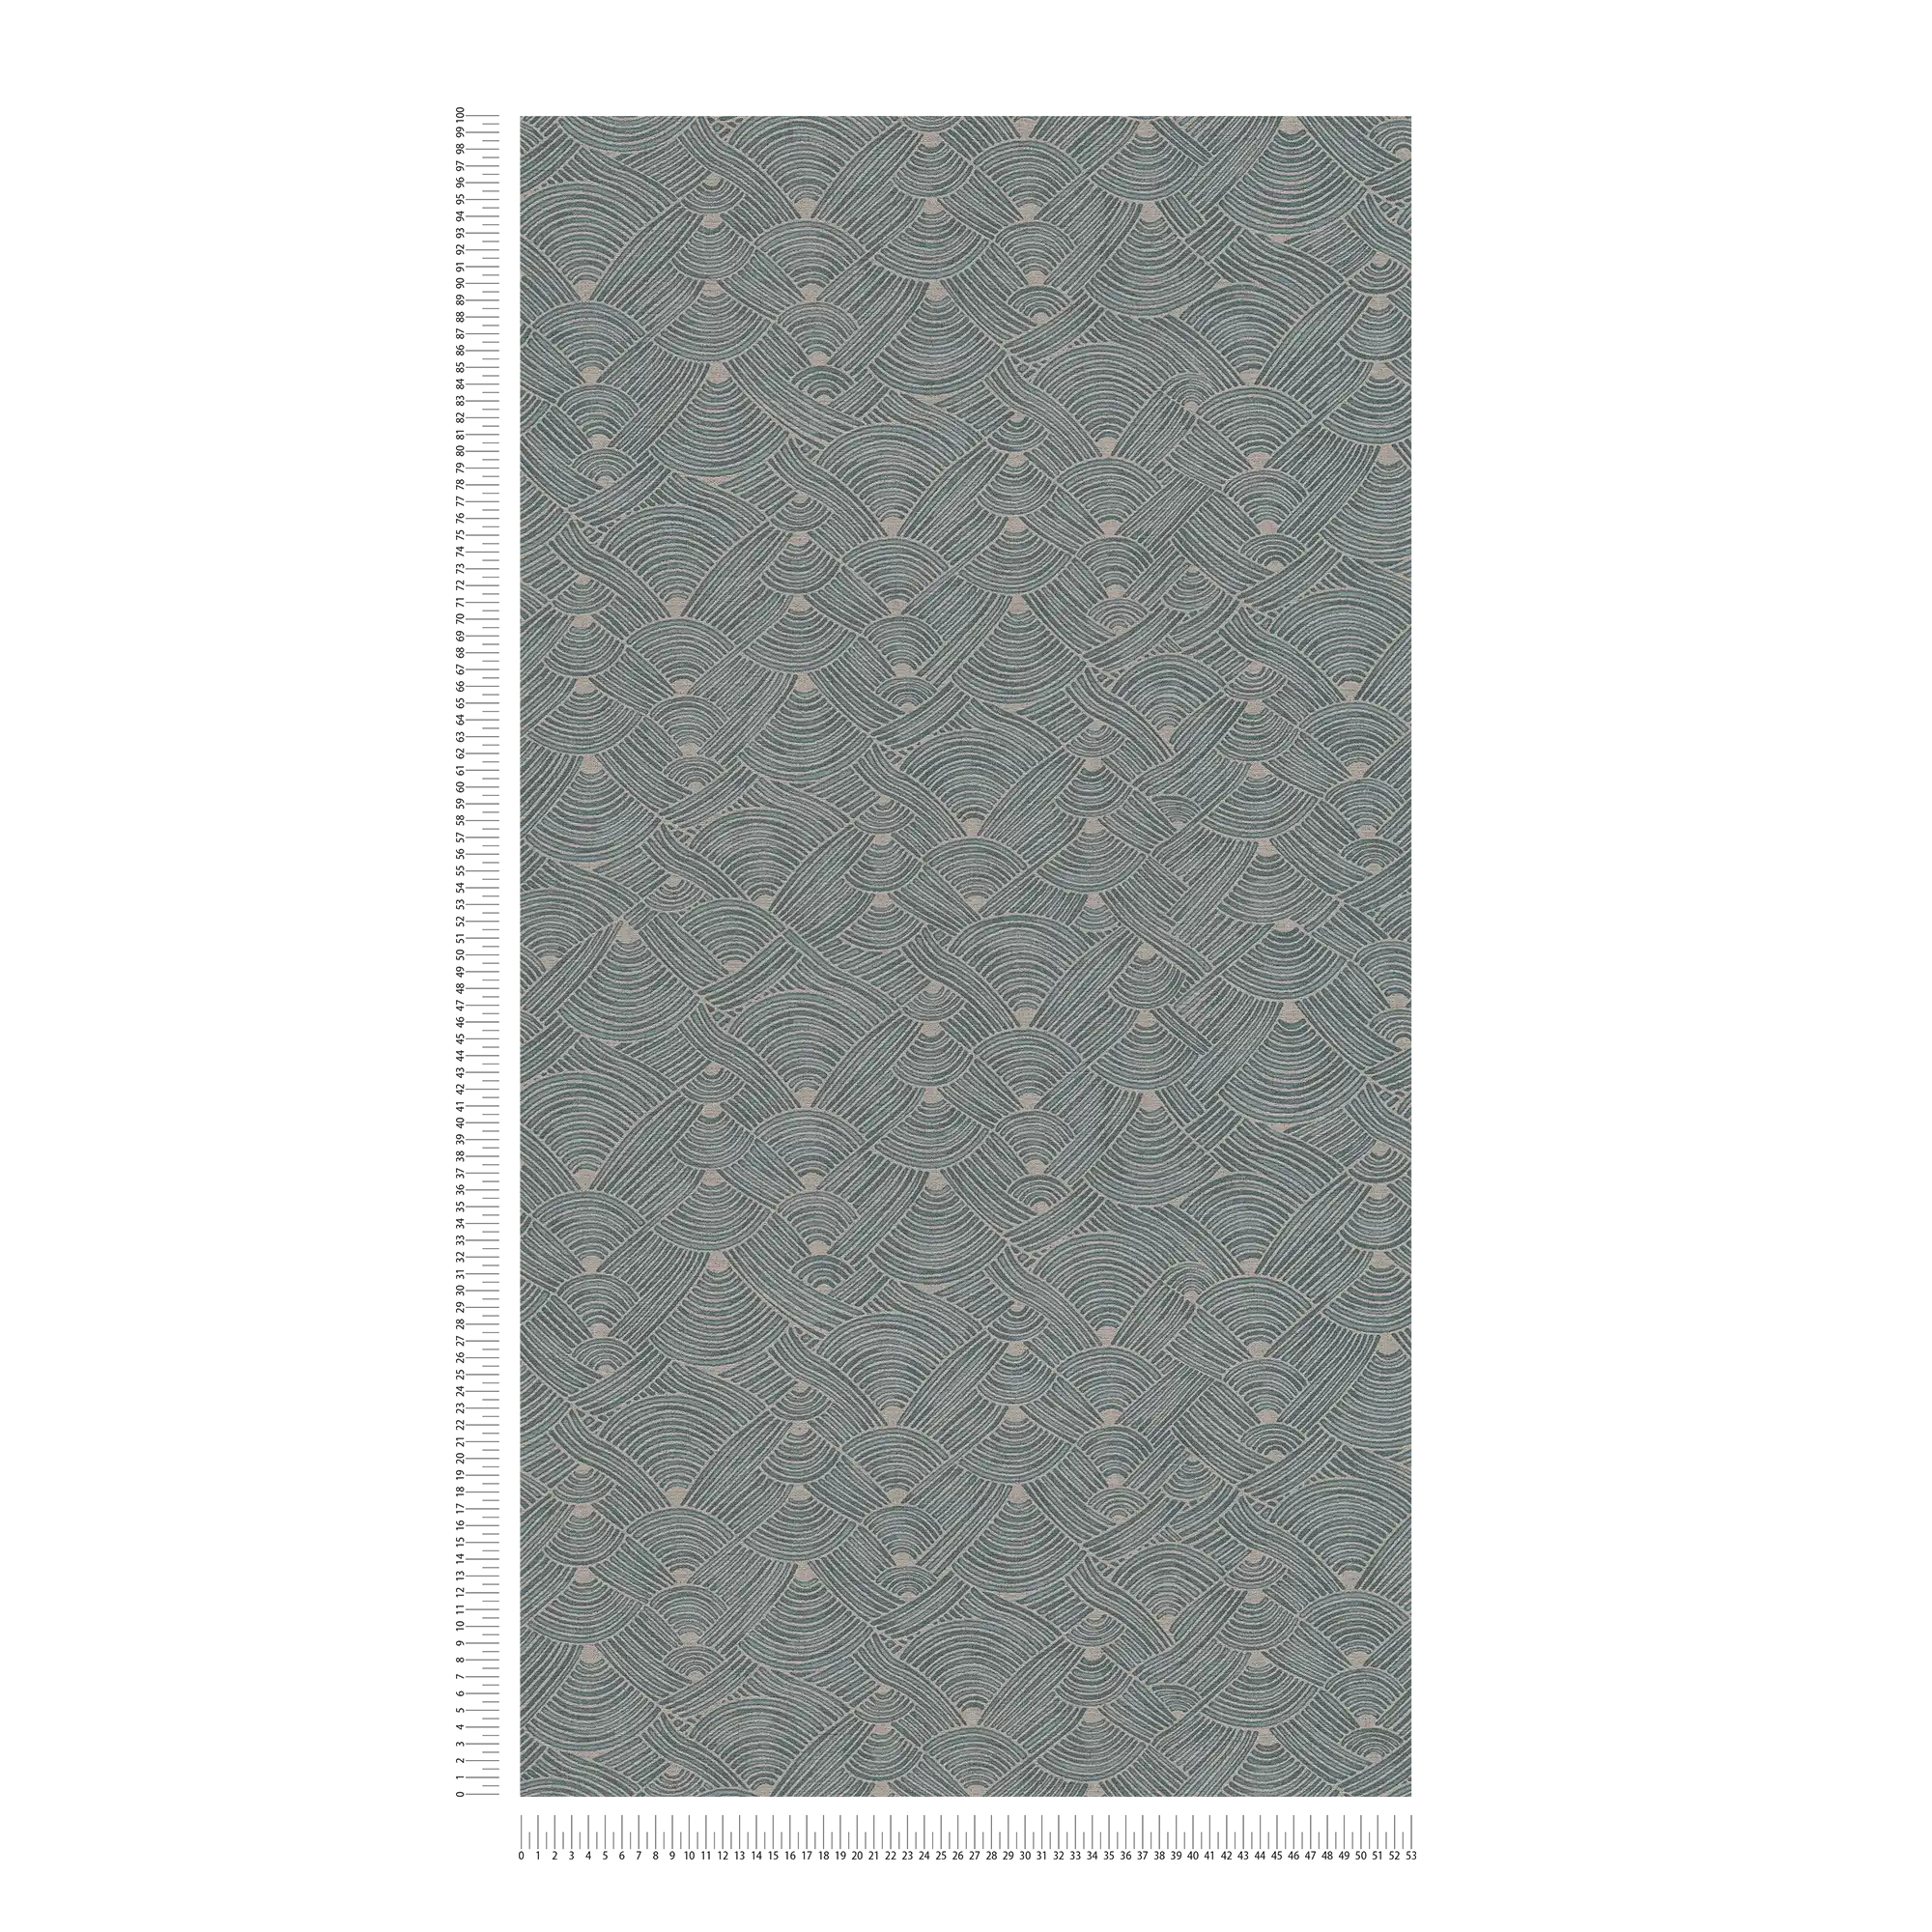             Vliestapete Ethno Design mit Korb-Optik – Blau, Grau, Beige
        